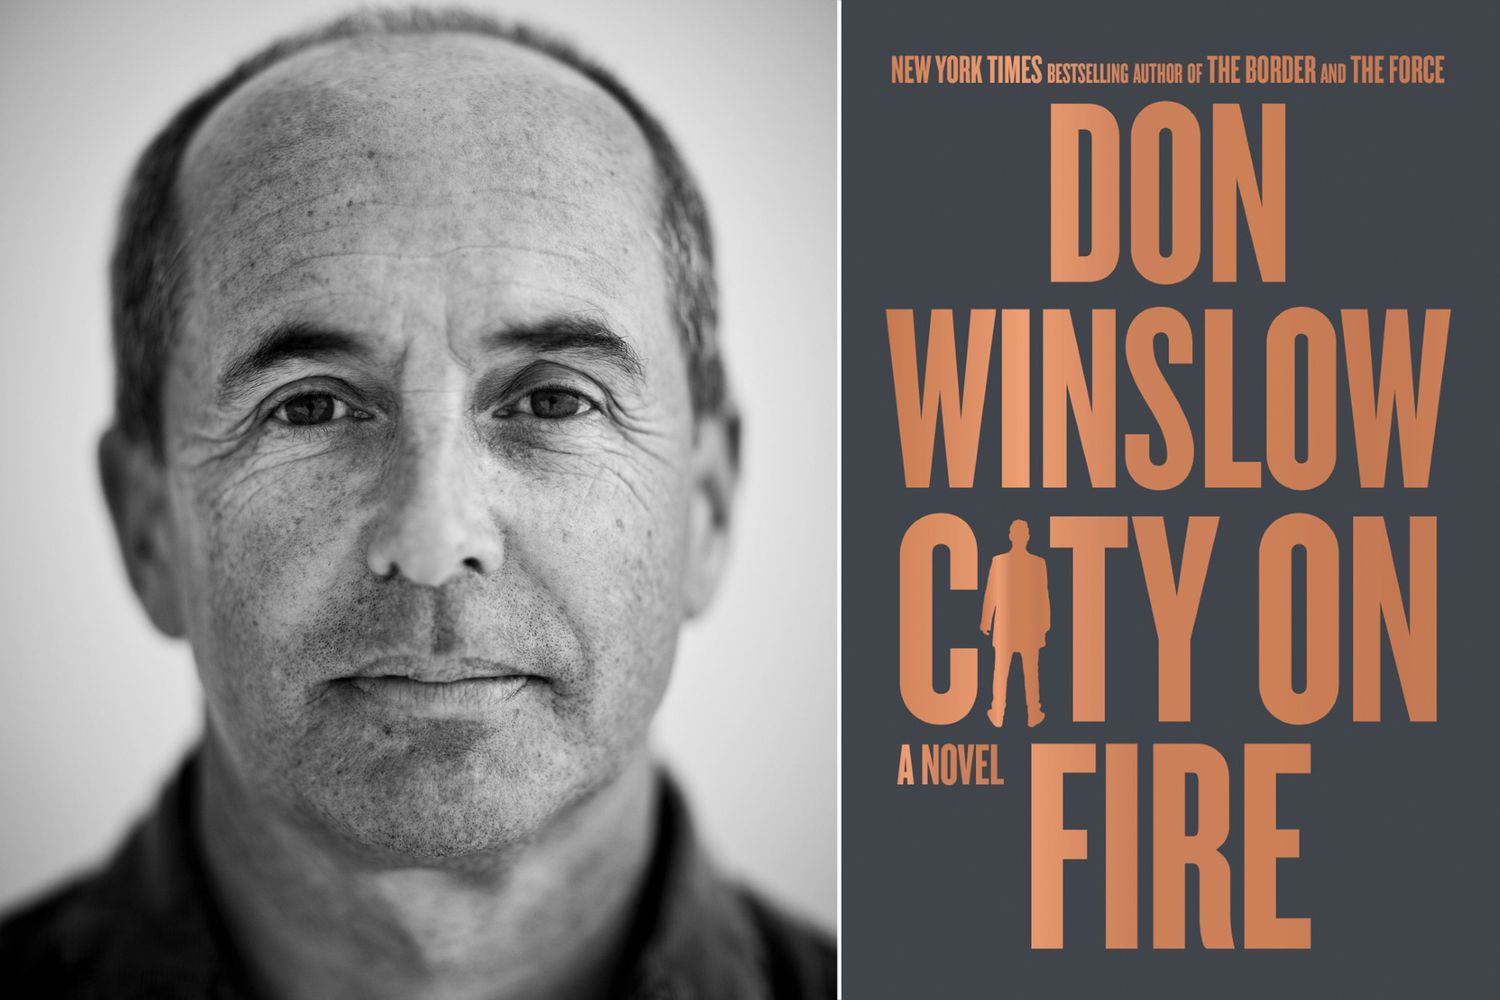 Don Winslow, City on Fire